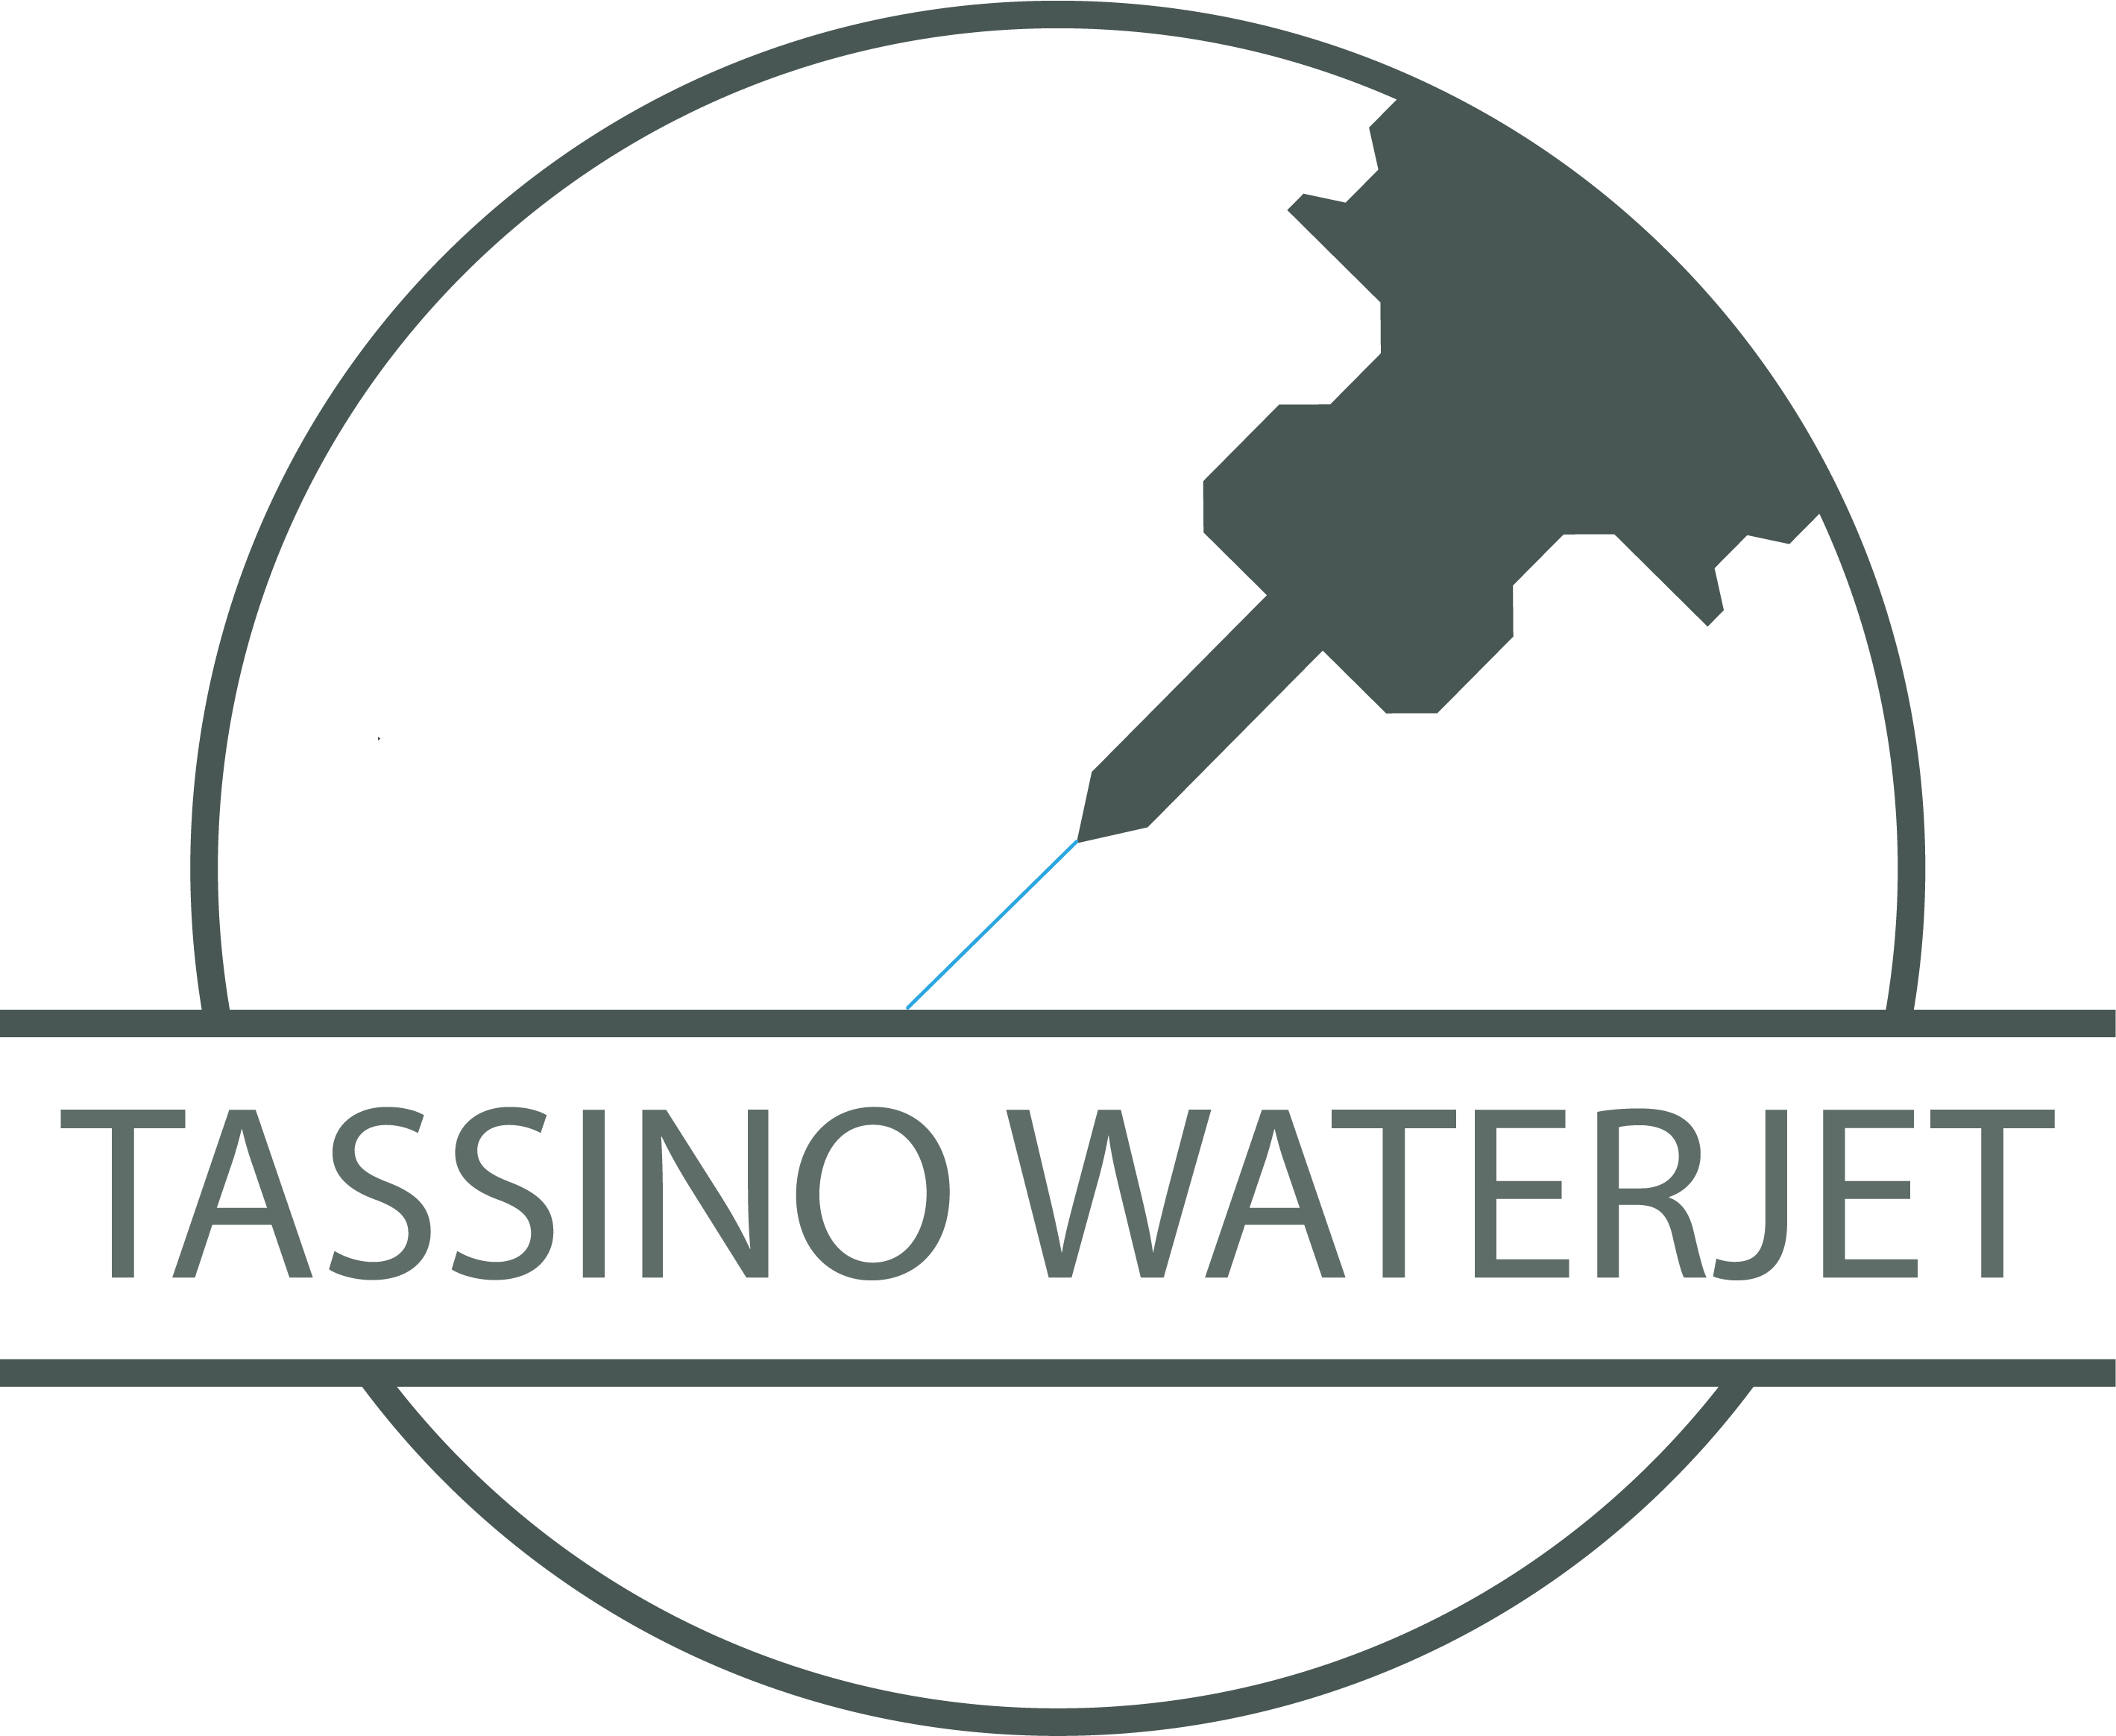 Tassino Waterjet